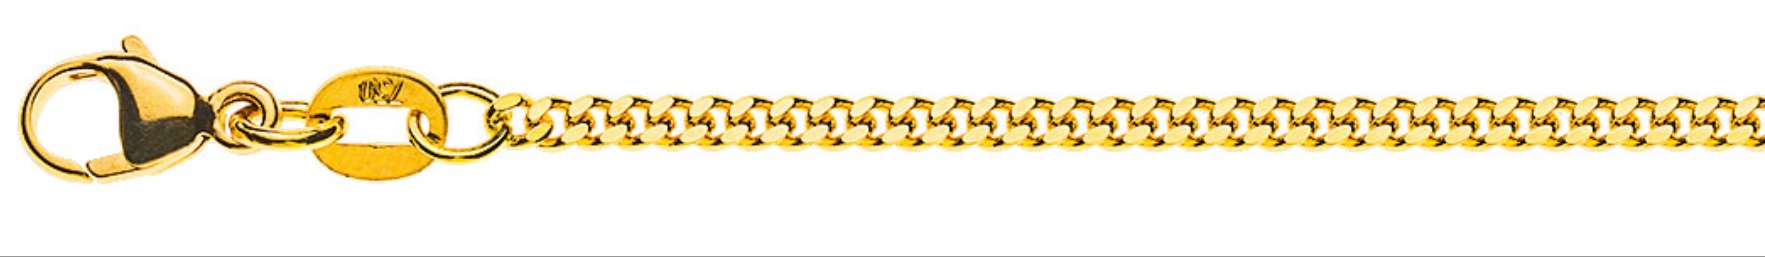 AURONOS Prestige Necklace yellow gold 18K curb chain polished 60cm 2.0mm